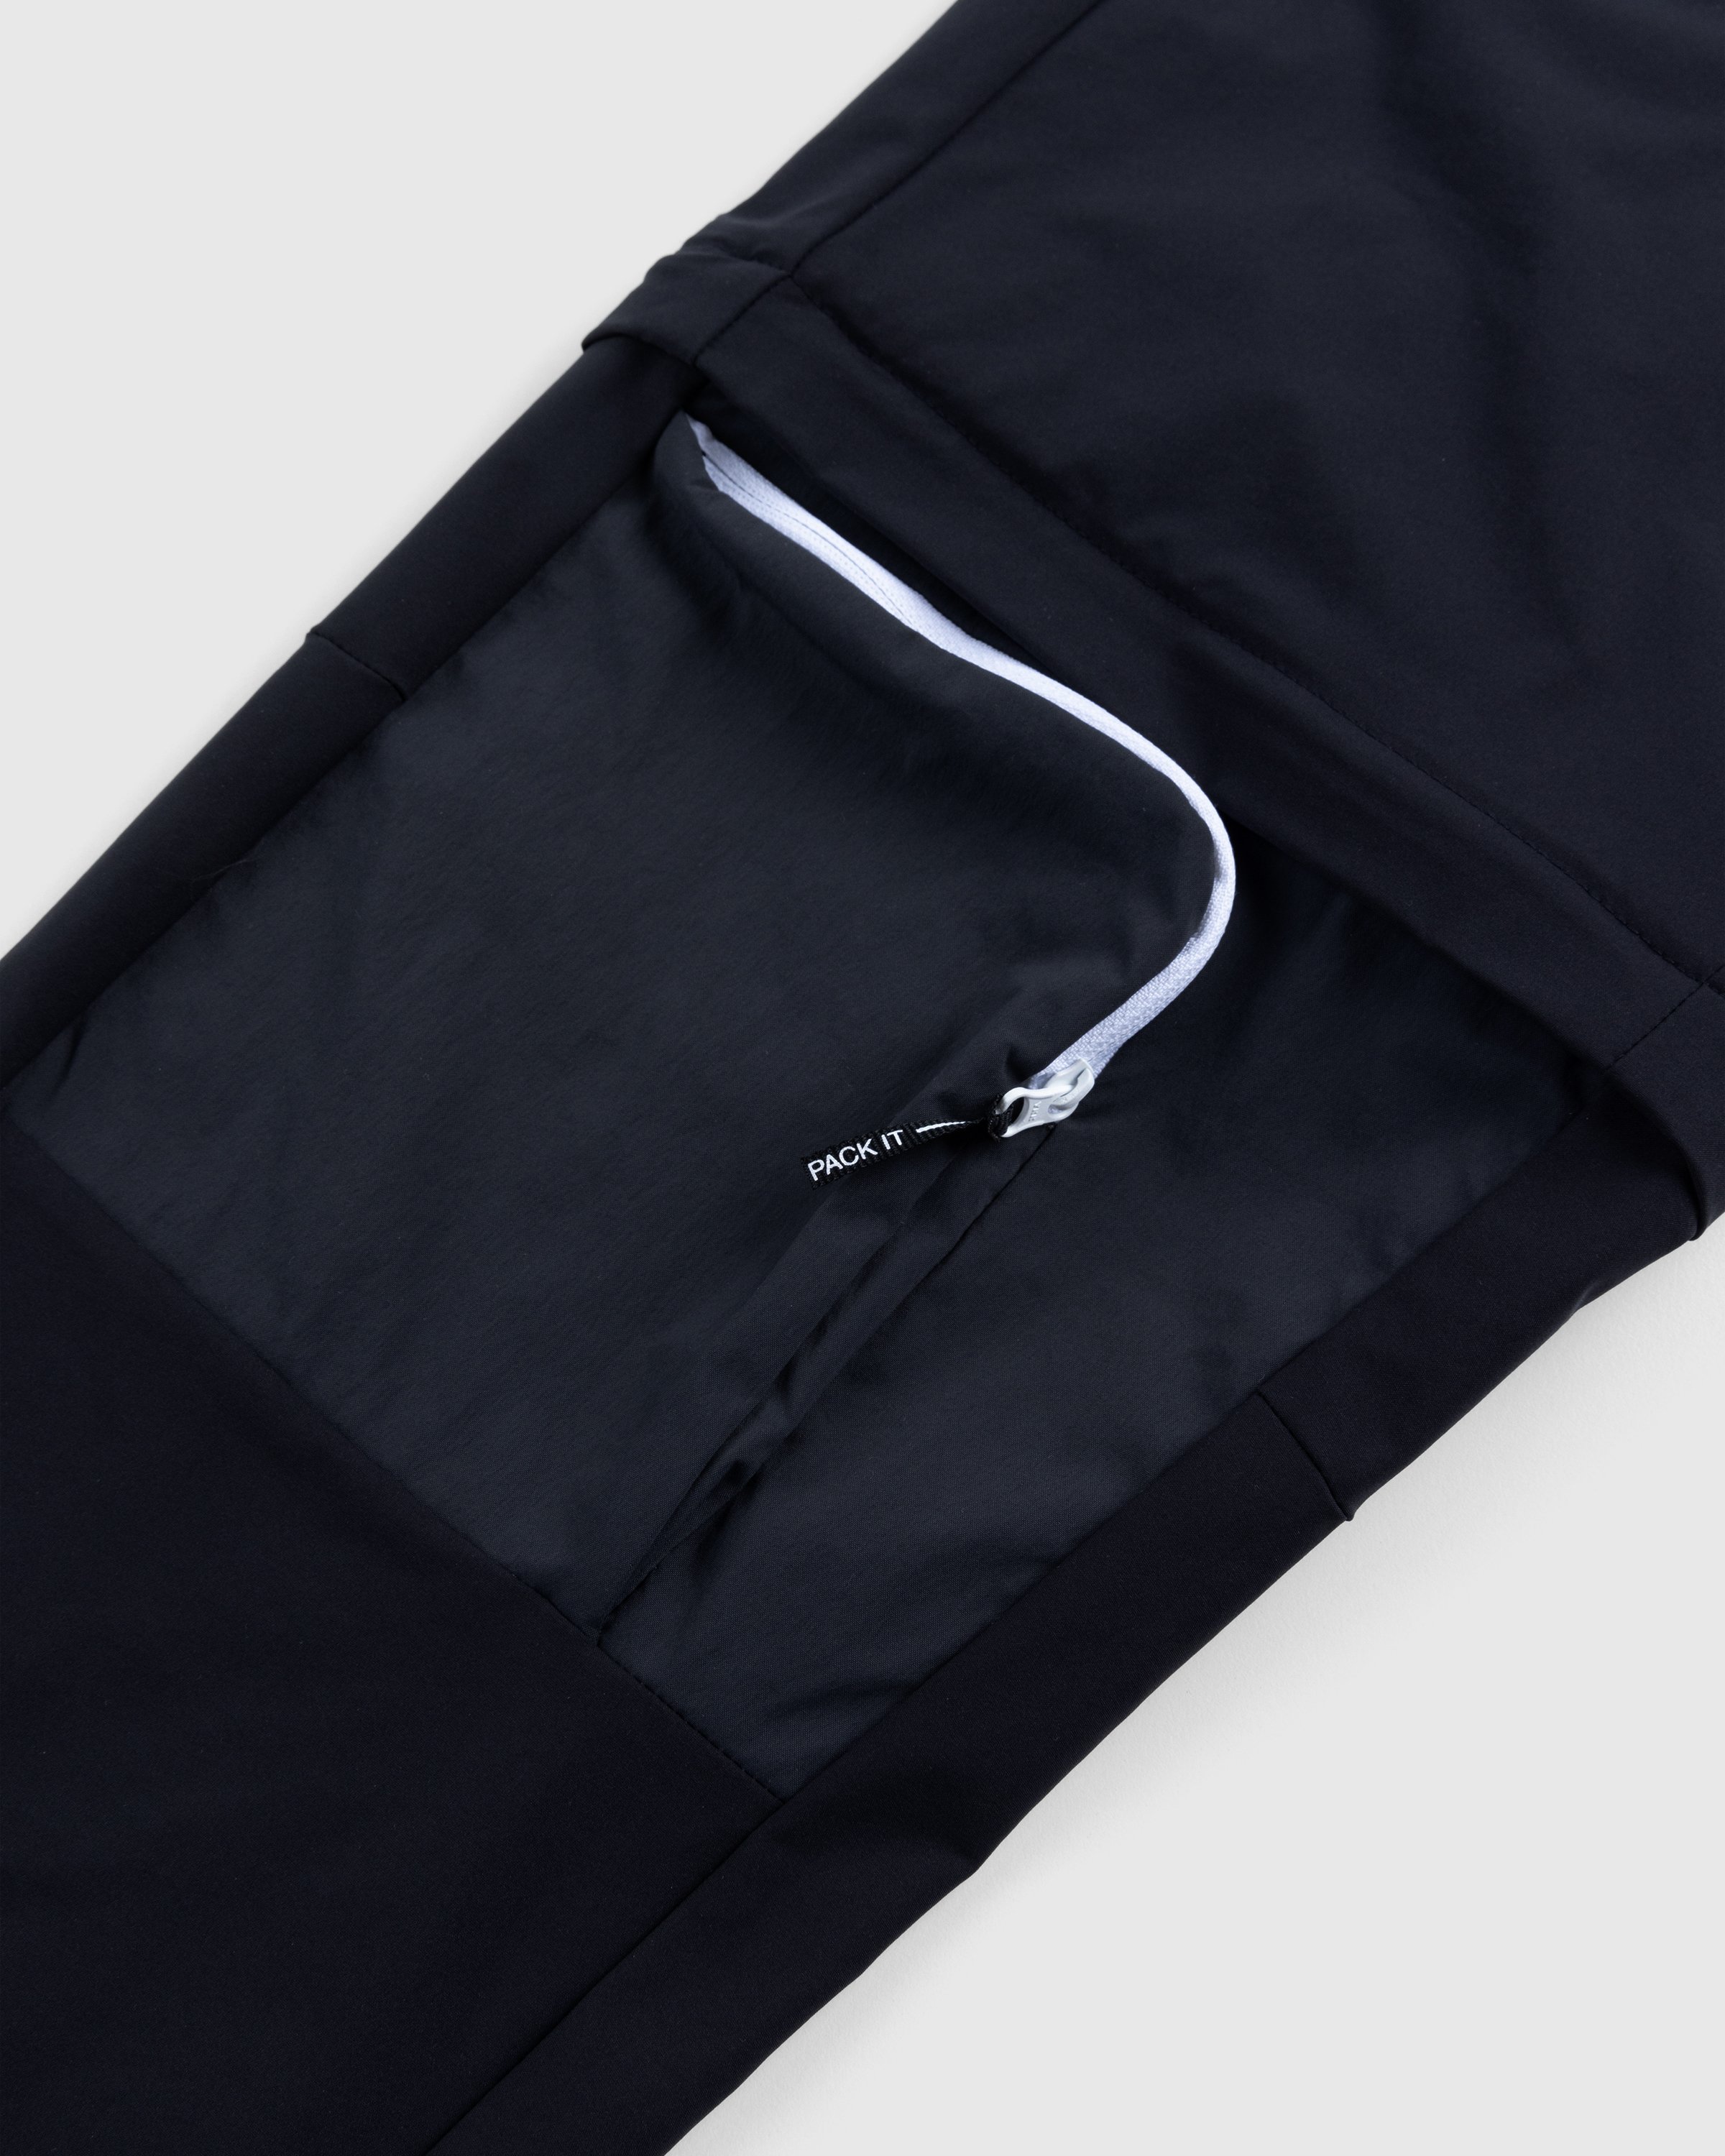 Adidas - Voyager Pants Black/Carbon - Clothing - Black - Image 6